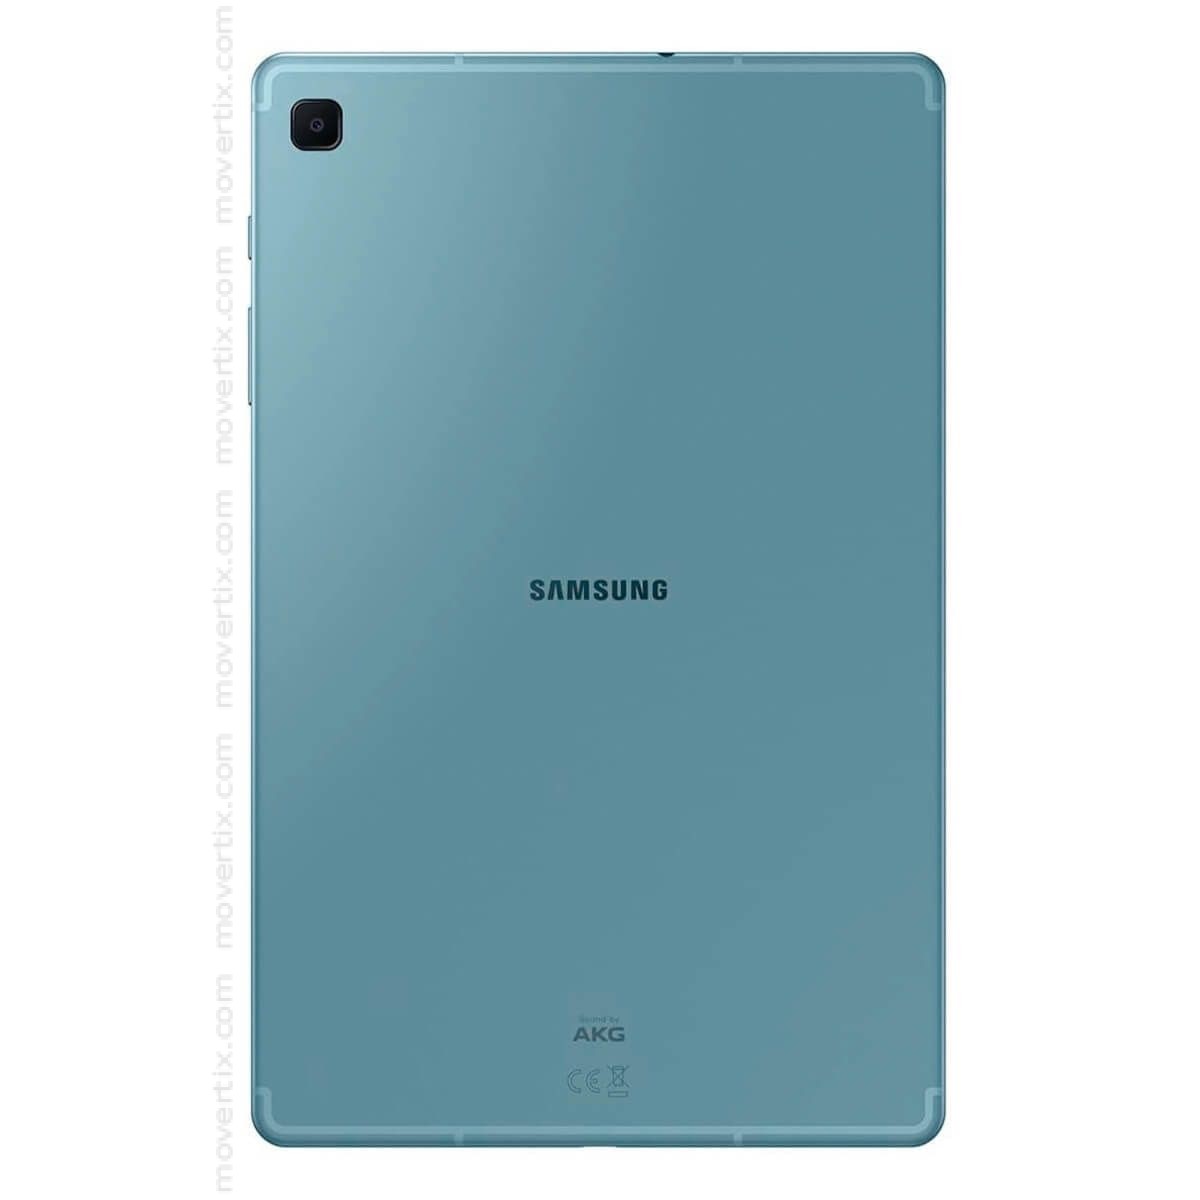 Samsung Galaxy Tab S6 Lite for sale in Oran, Algeria